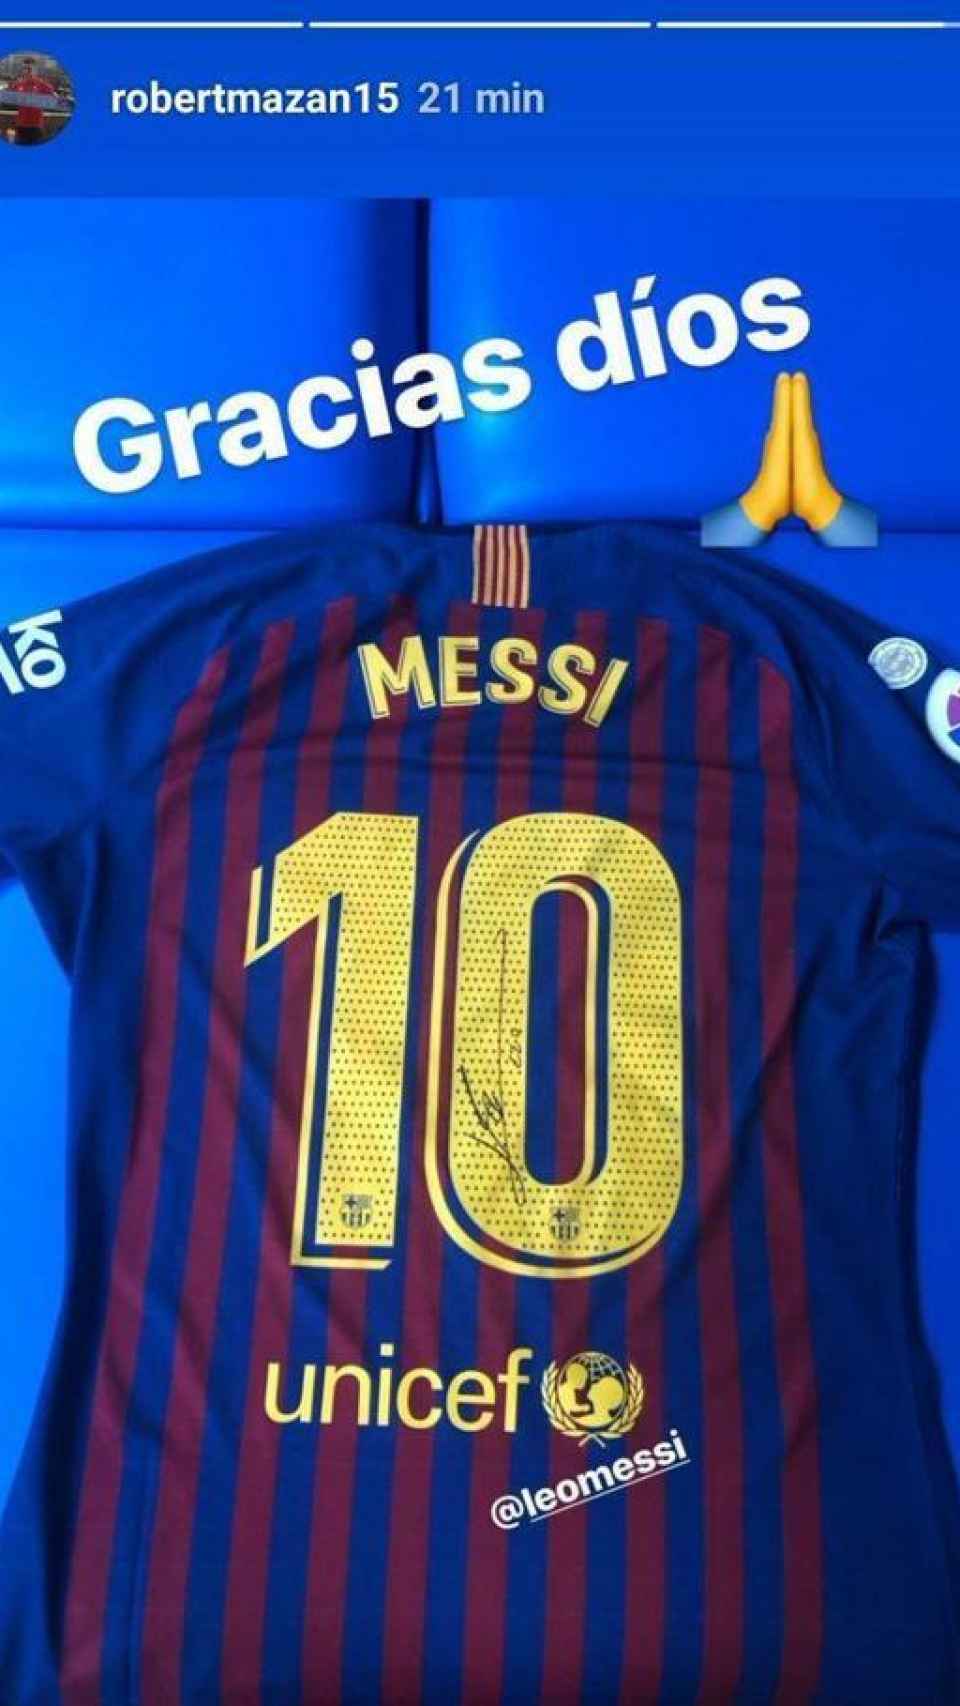 Imagen de la camiseta de Messi. Foto: (@robertmazan15)